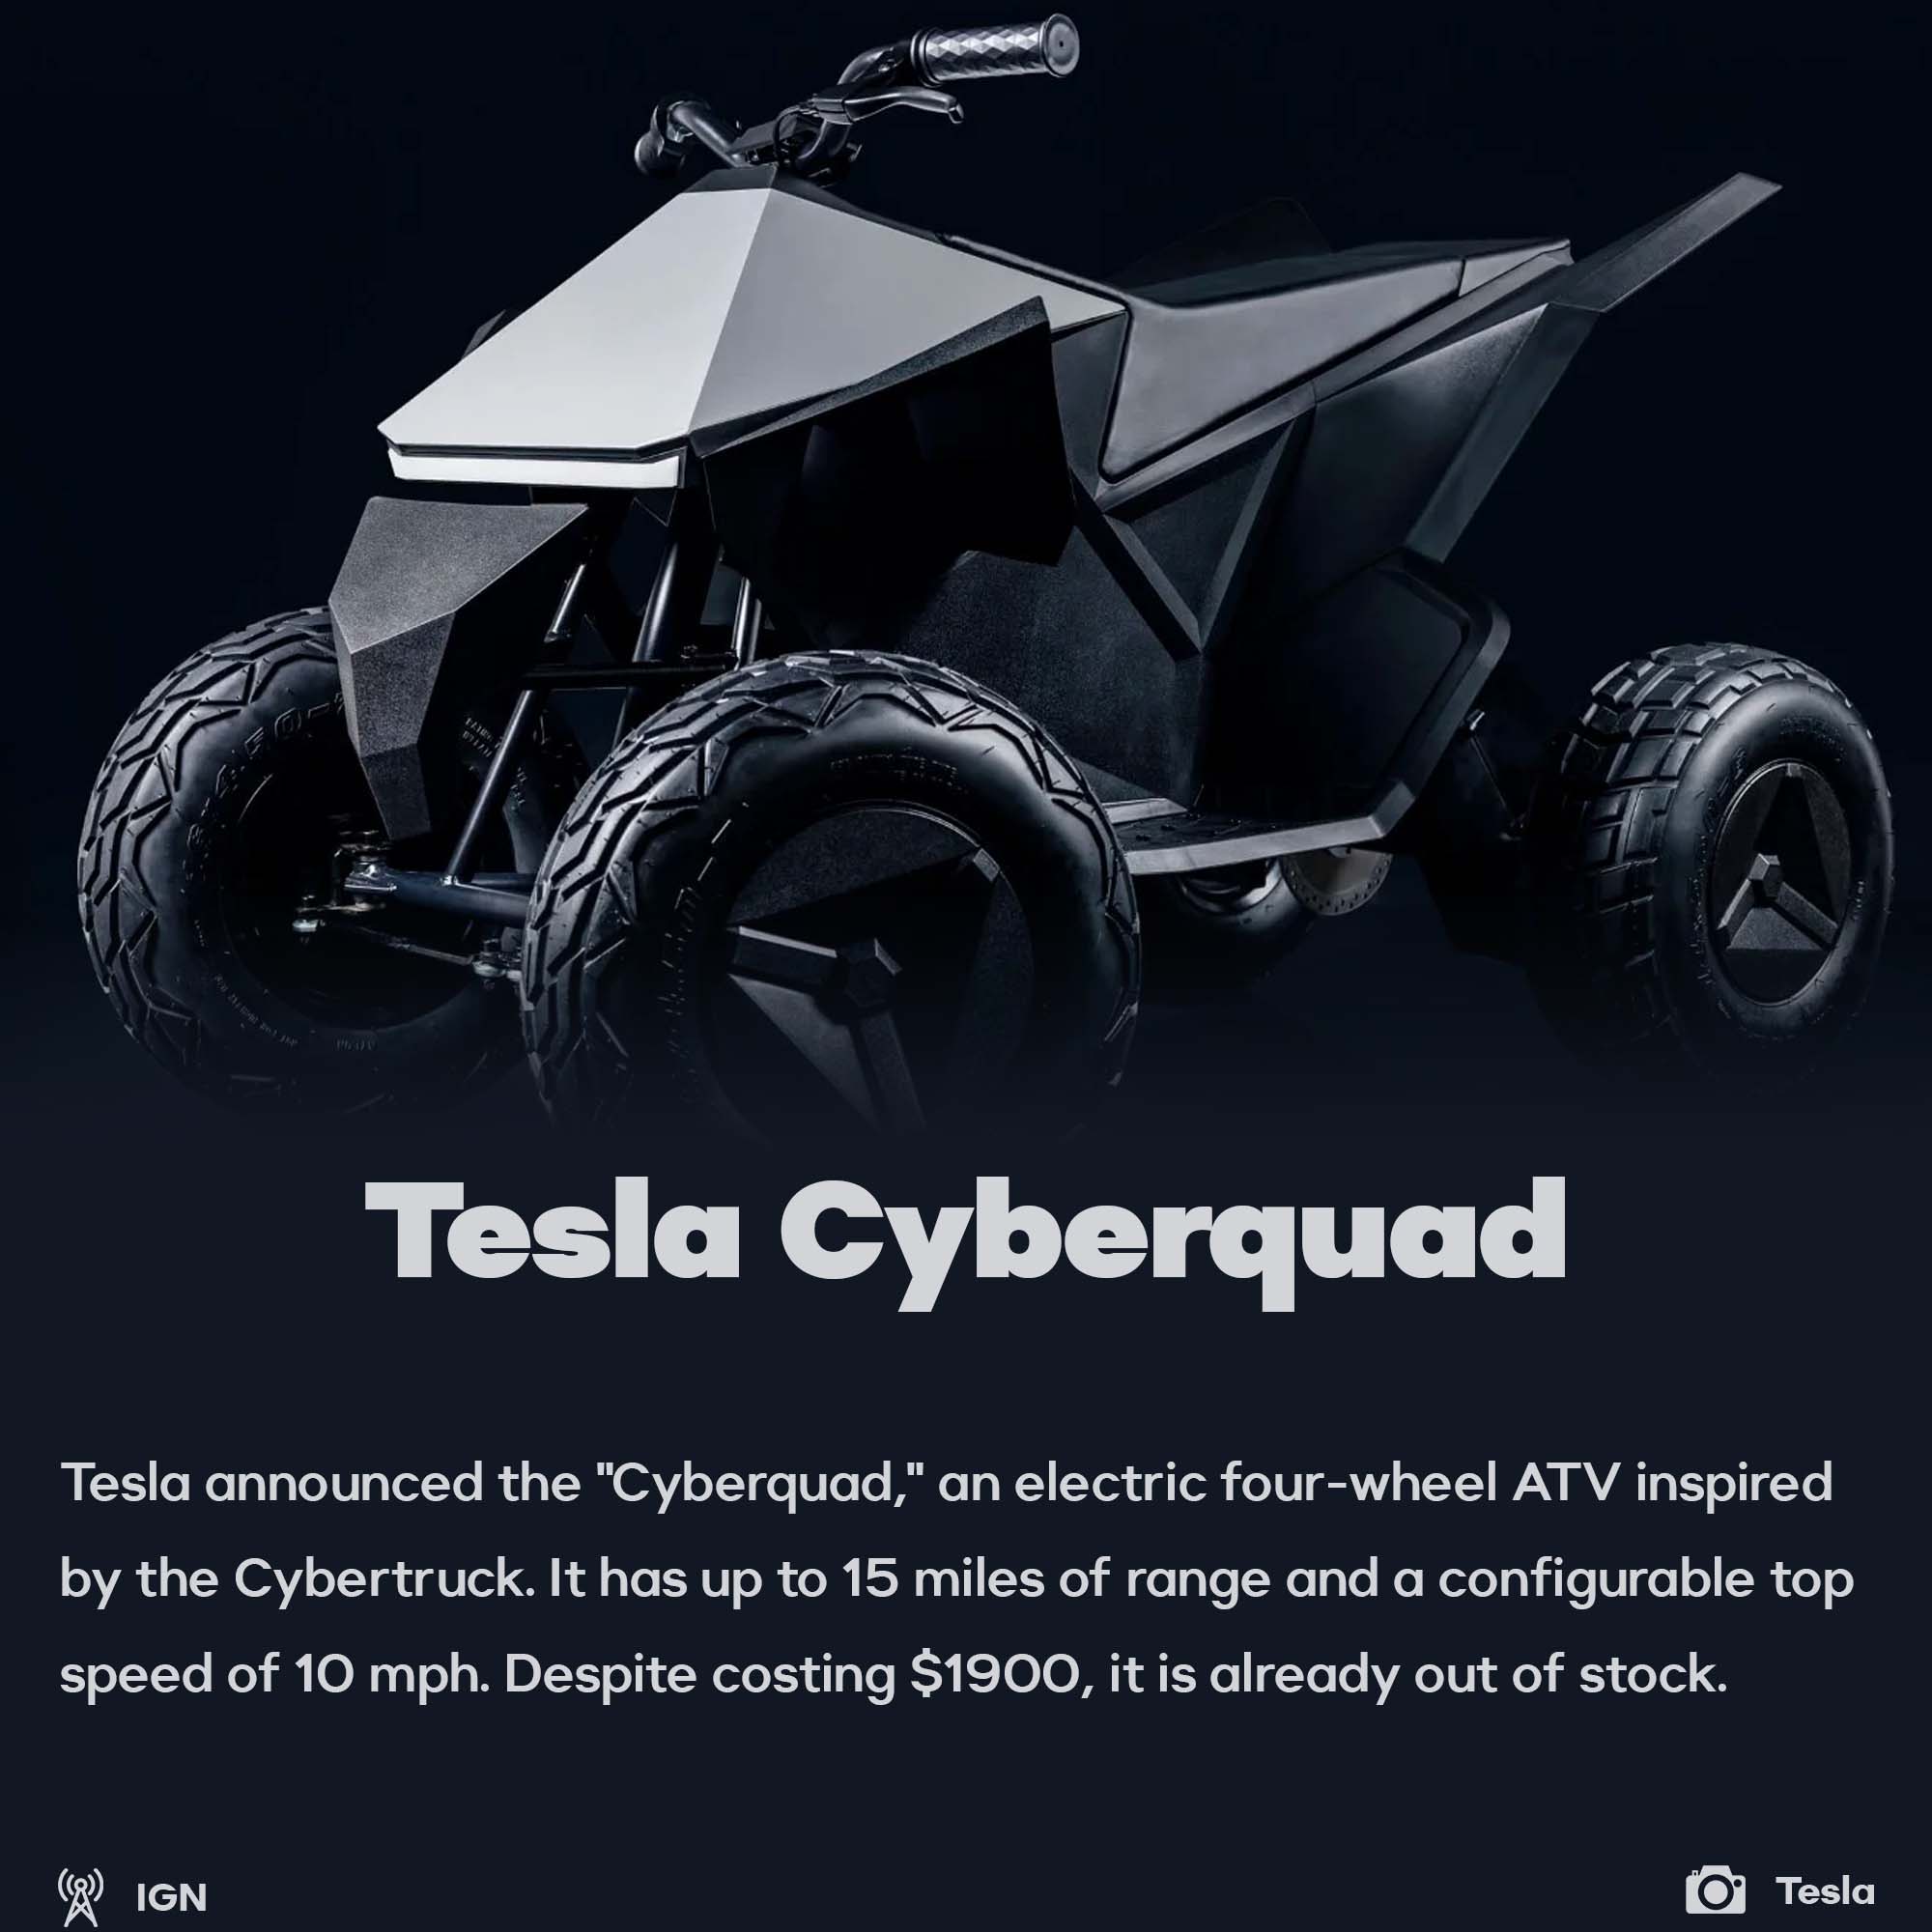 Tesla announced the Cyberquad